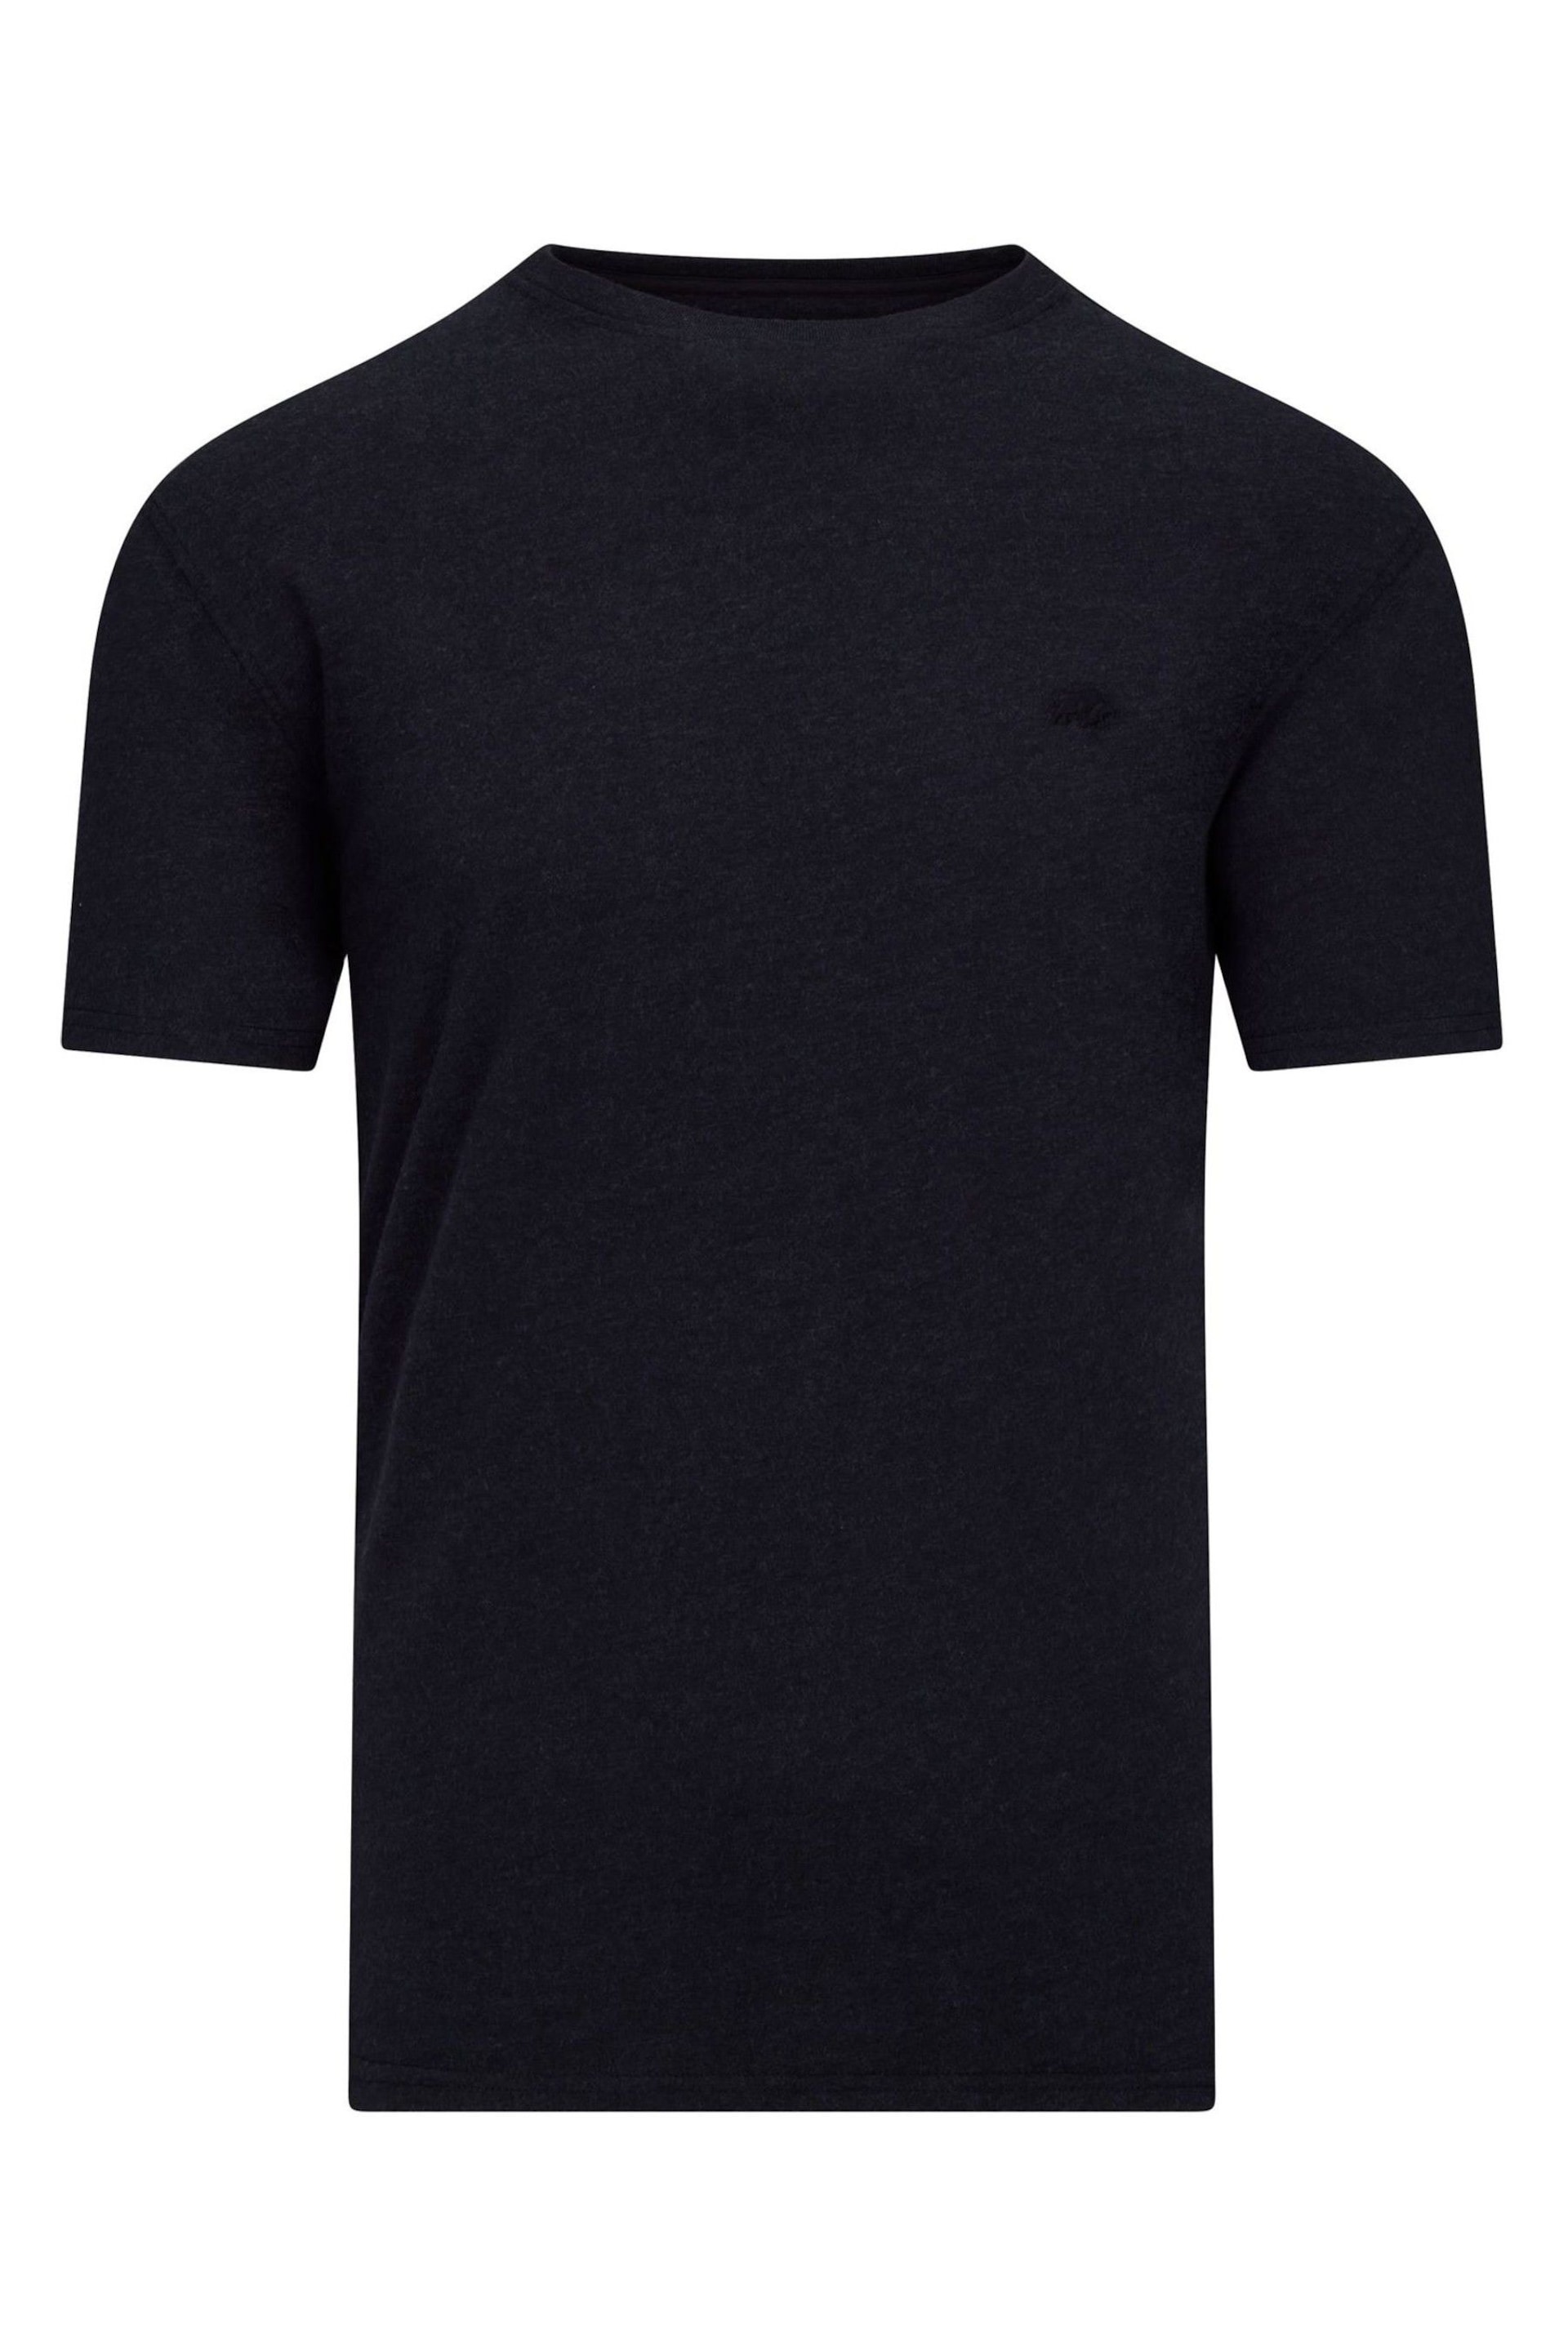 Raging Bull Black/White/Blue Multipack Classic Organic T-Shirt - Image 3 of 7